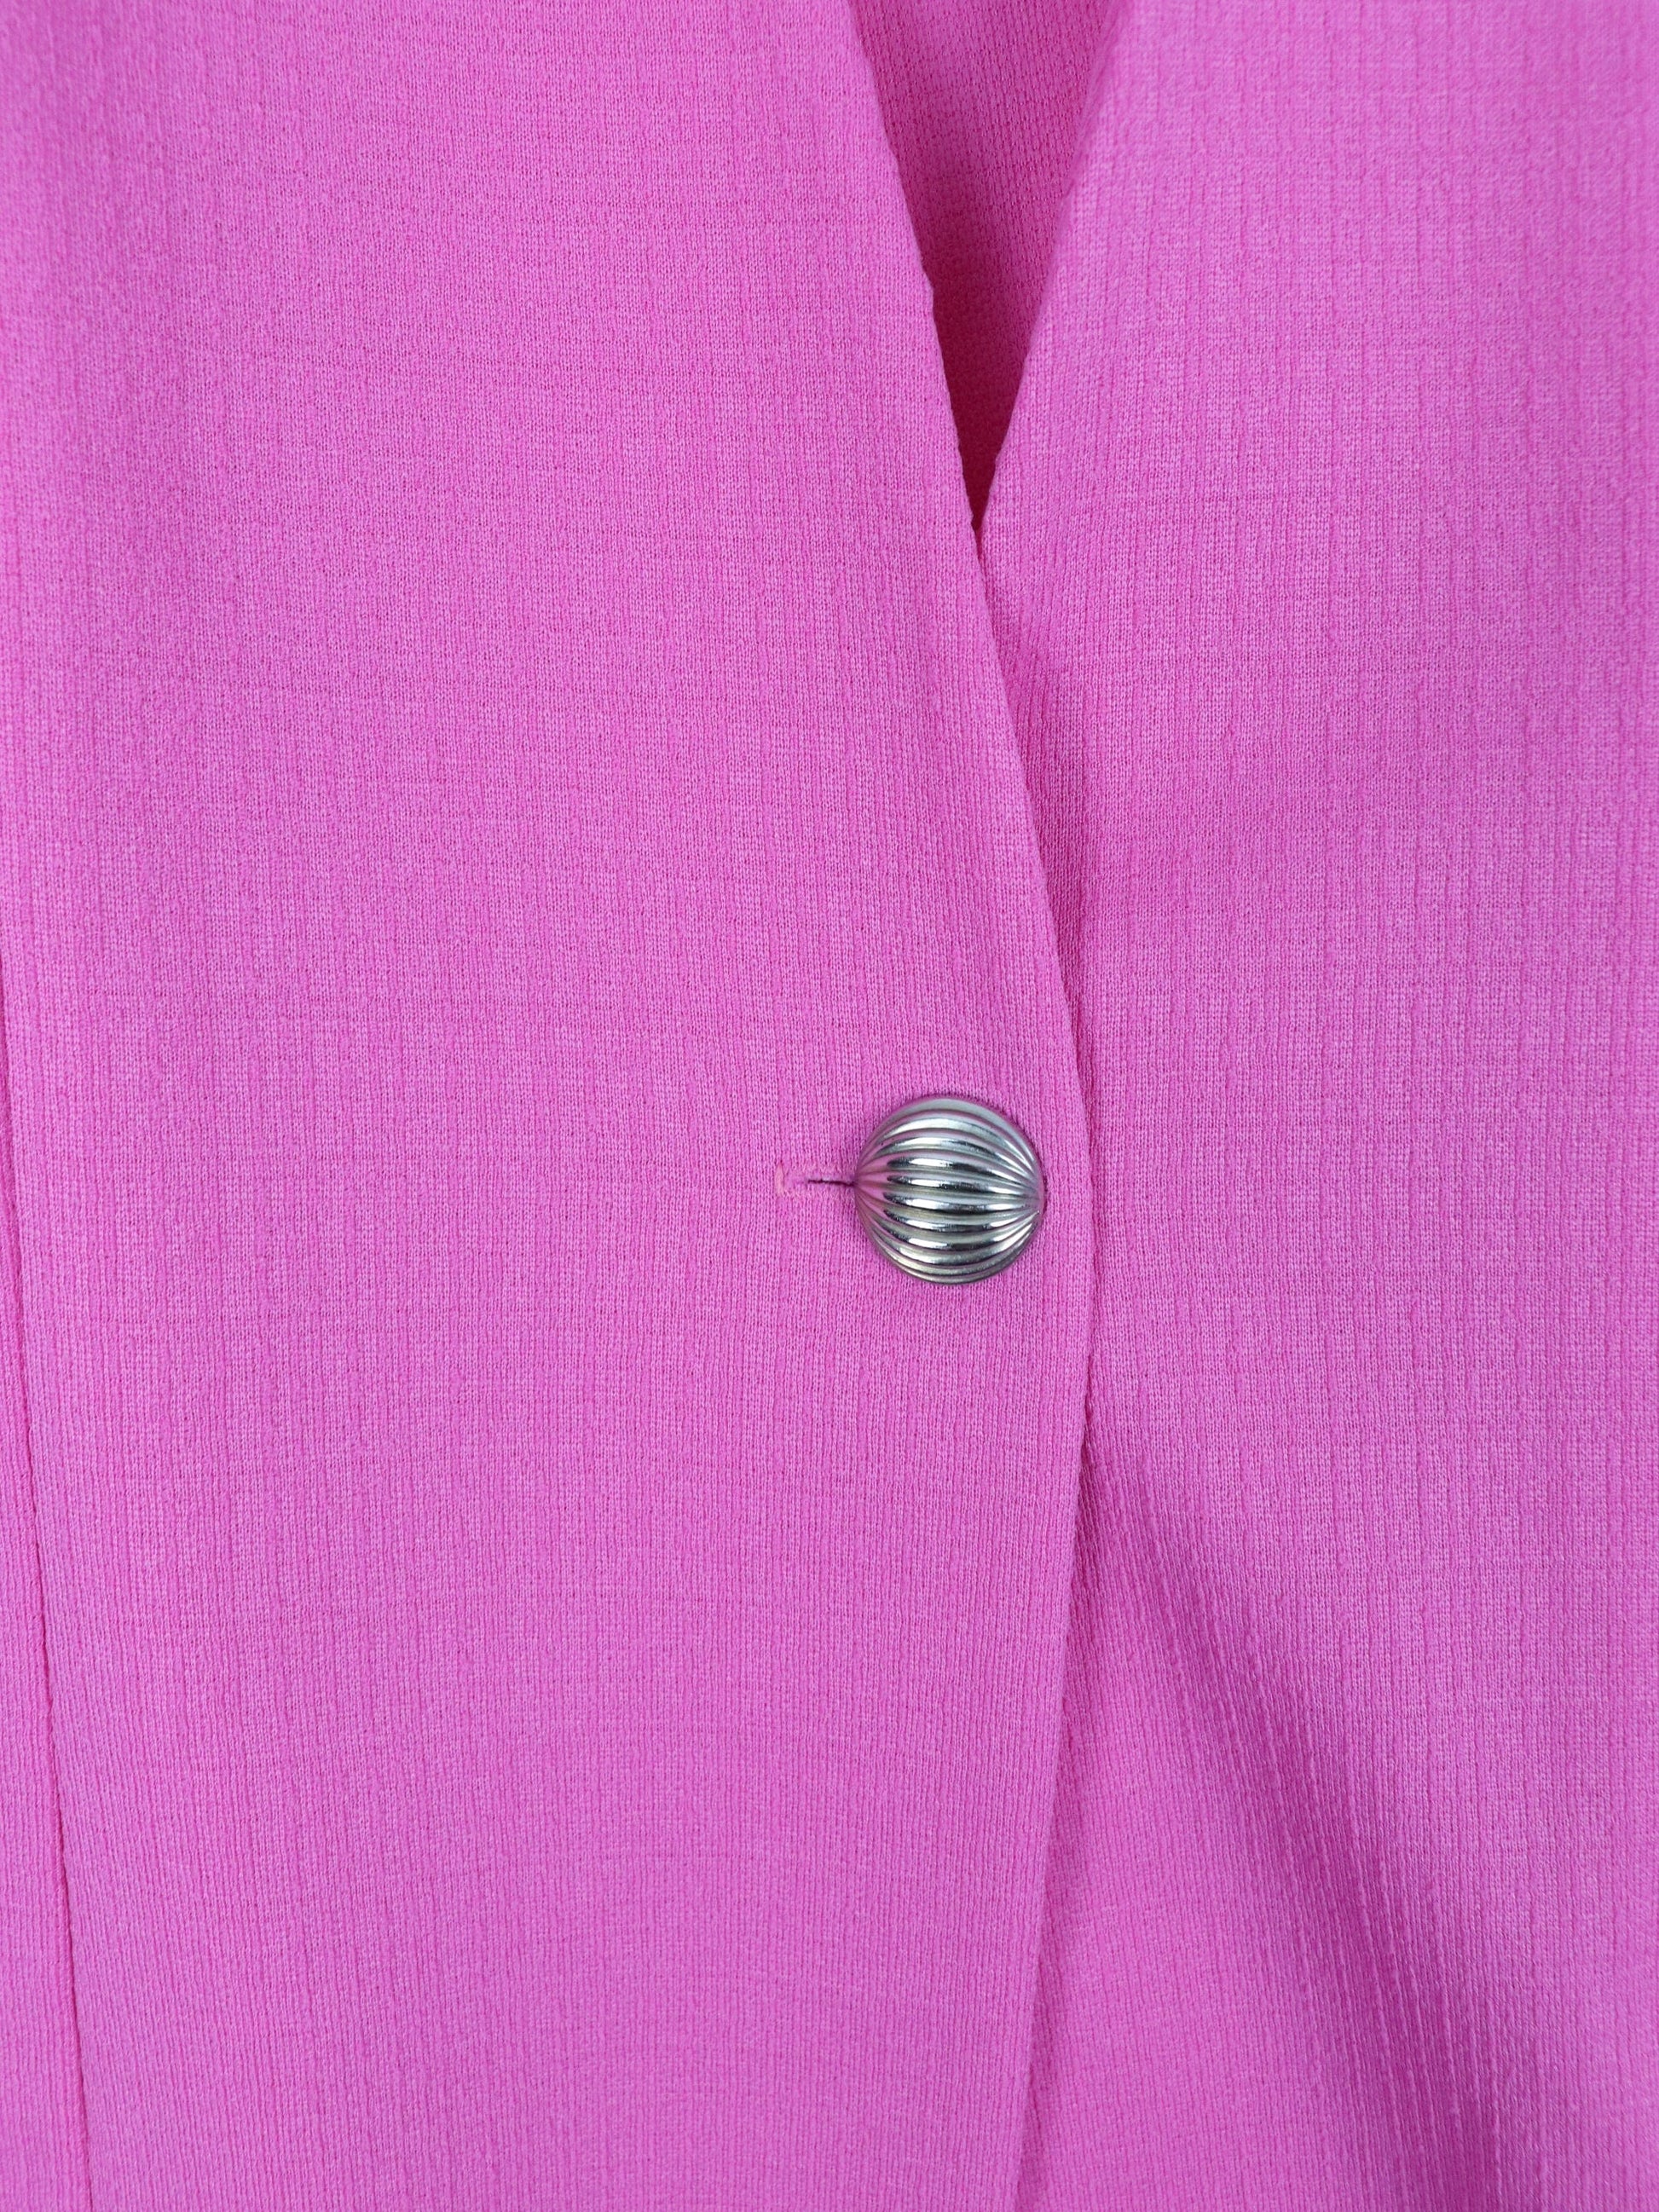 Other Jackets & Coats Vintage Blair Jacket Womens 14 Pink Blazer Coat Casual